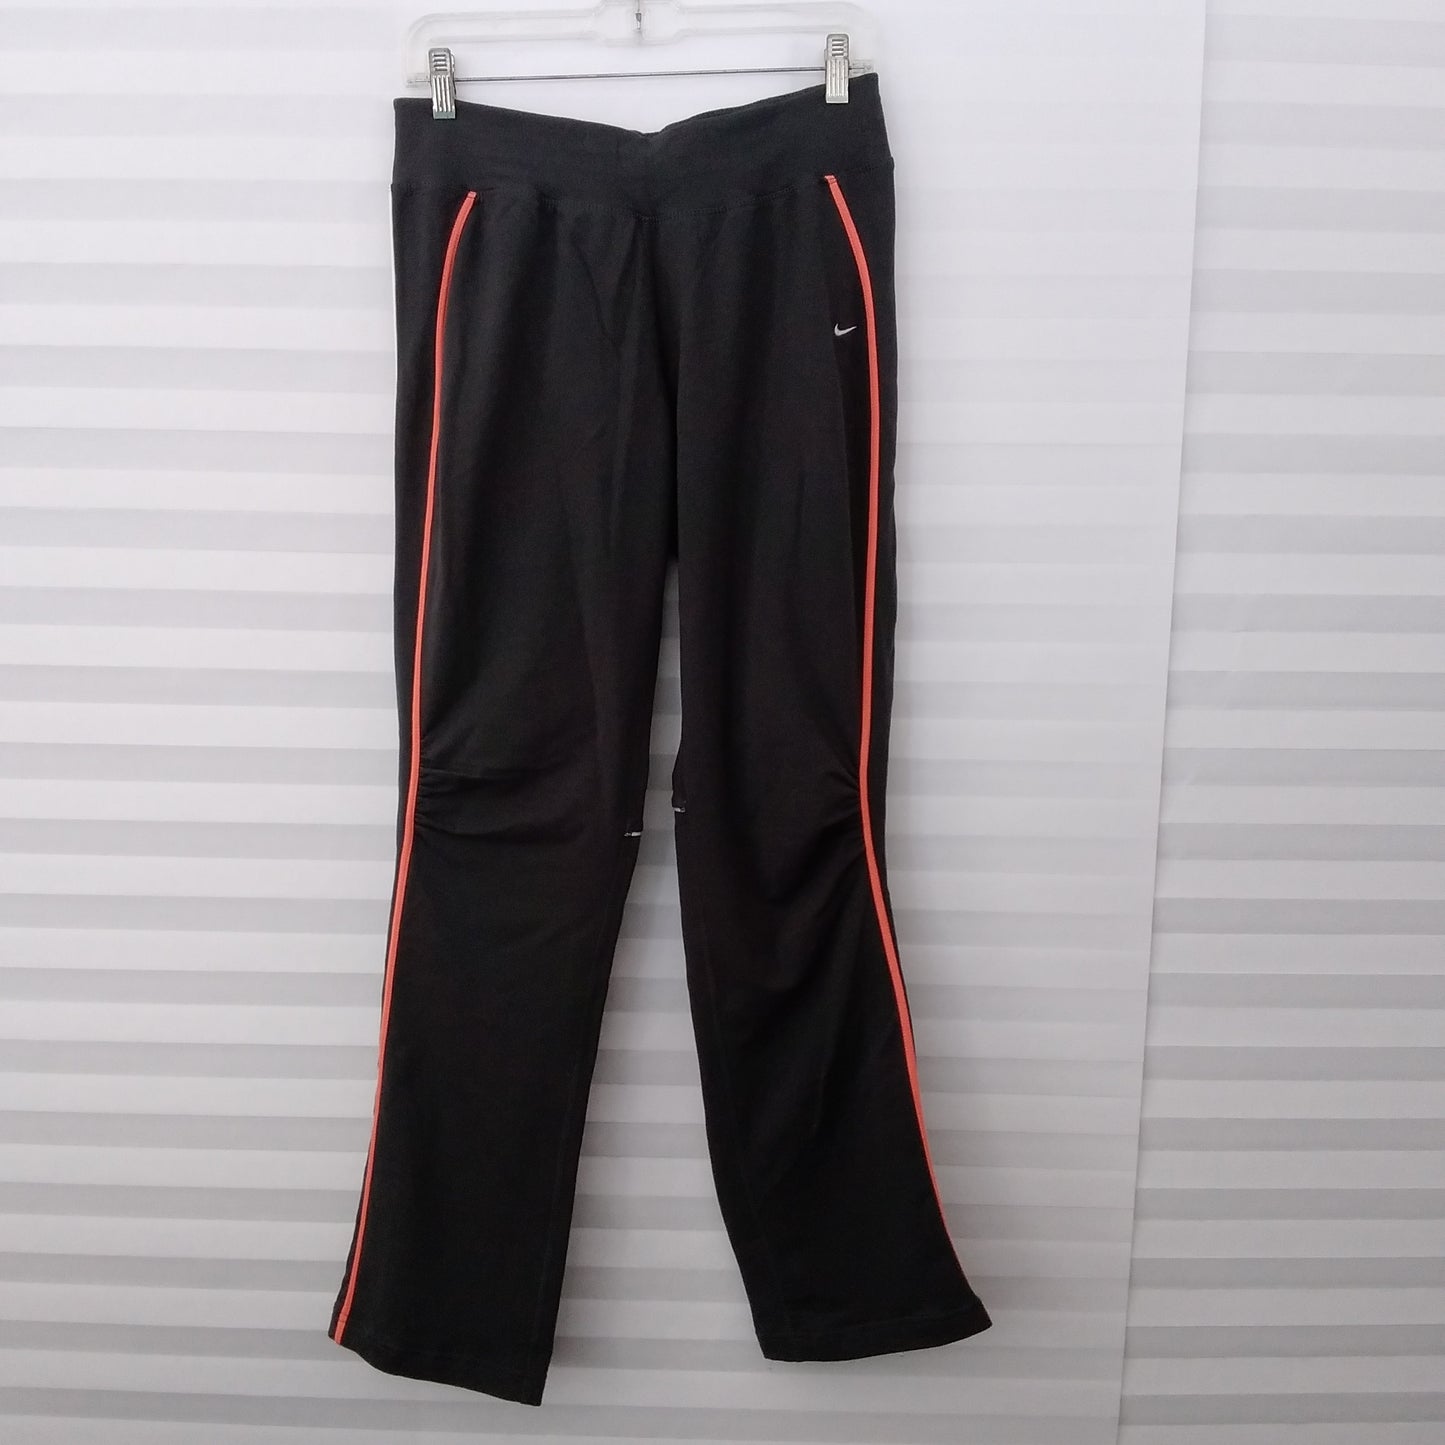 NWT - Nike Black Orange Dri-Fit Running Pants - M